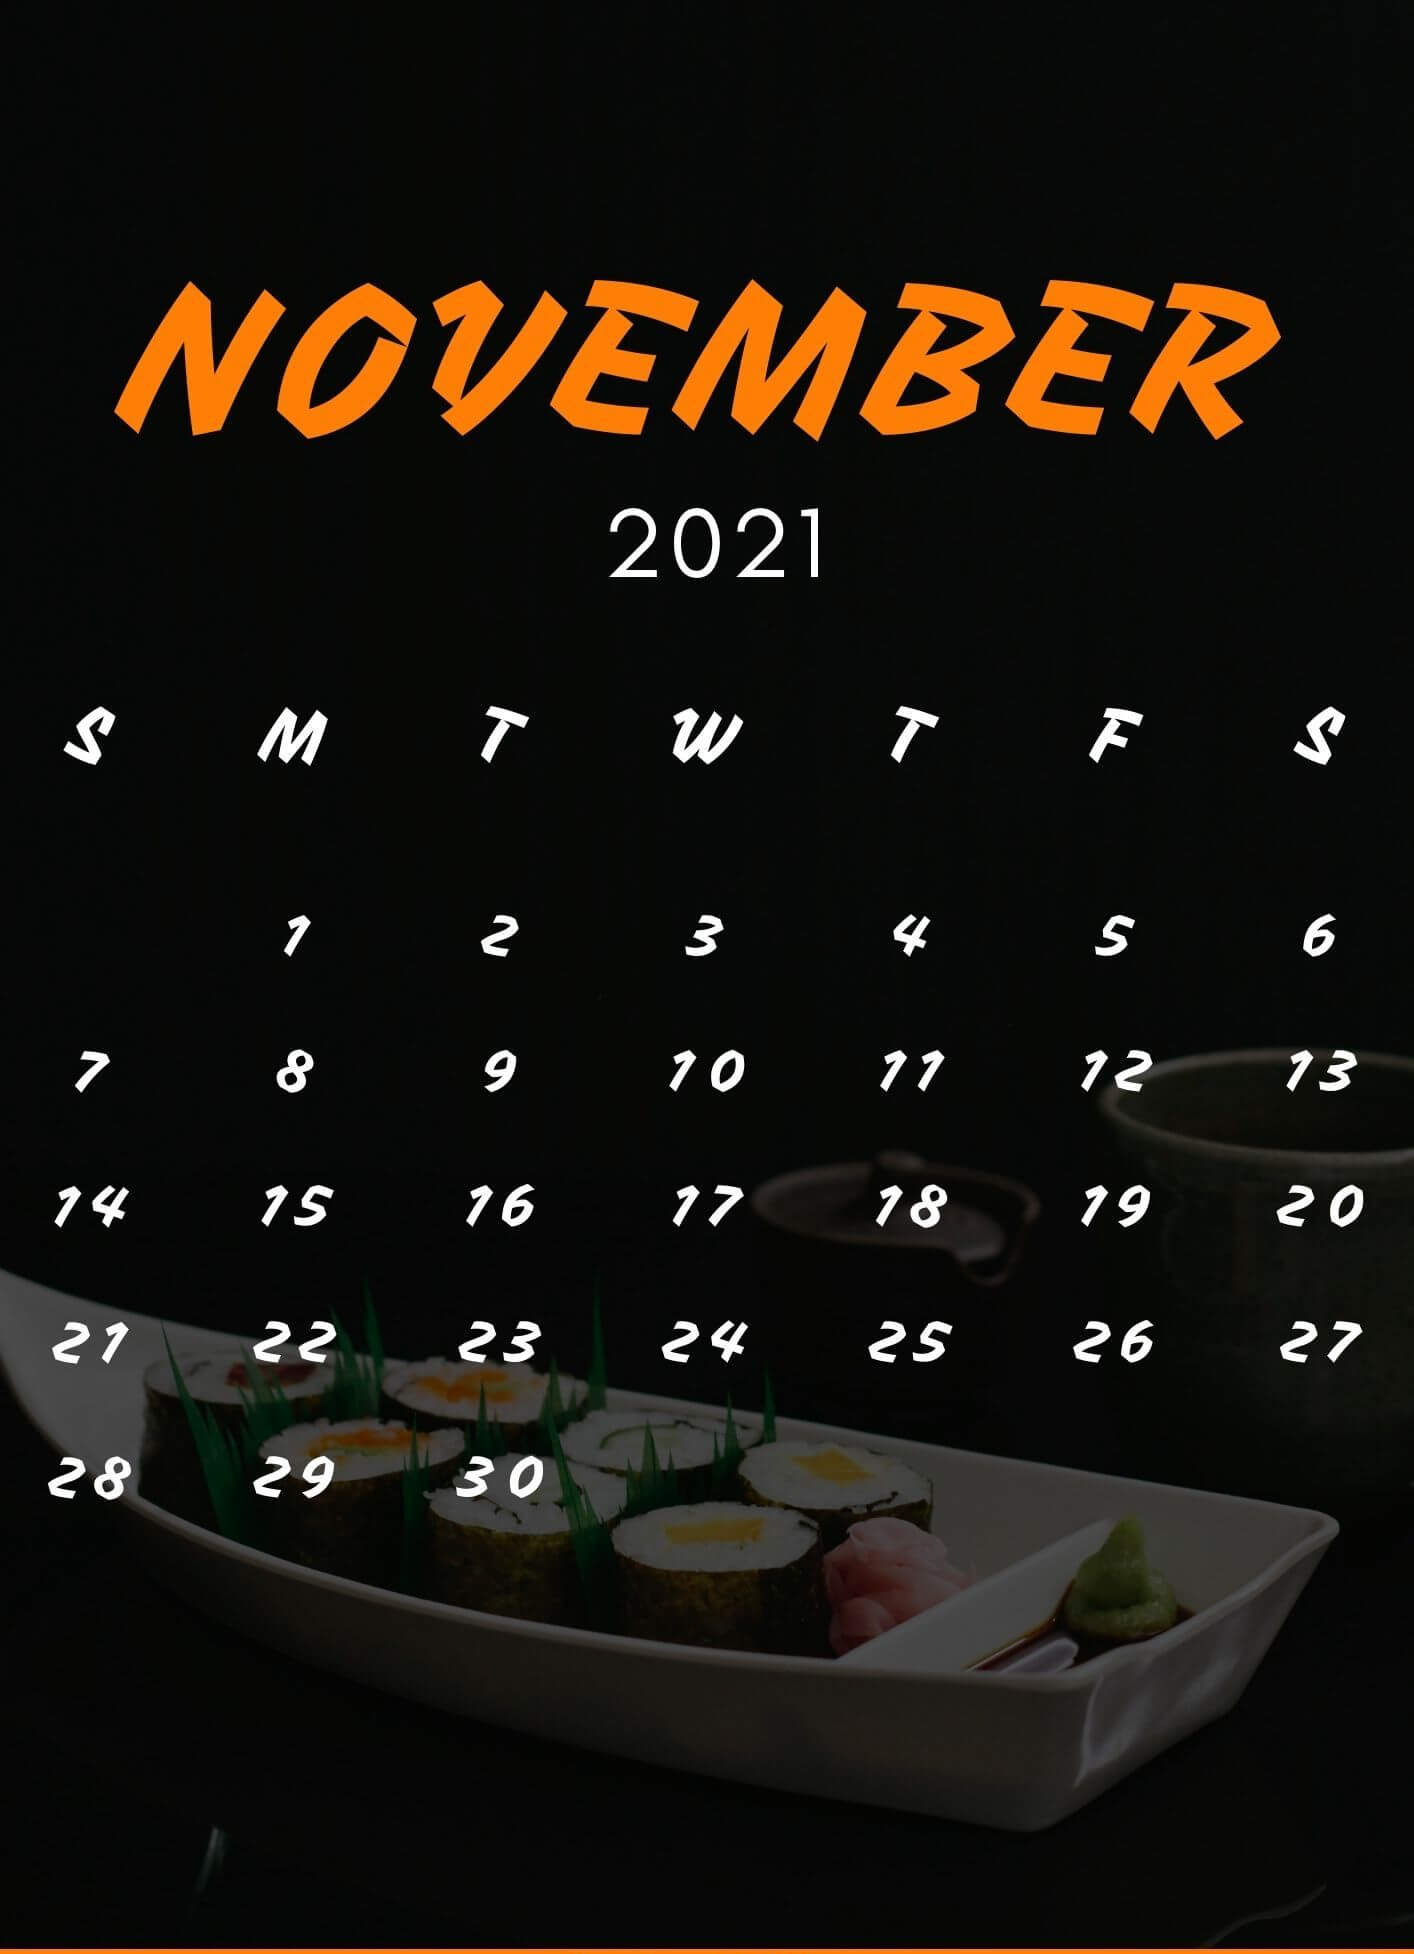 November 2021 iPhone Calendar Wallpaper